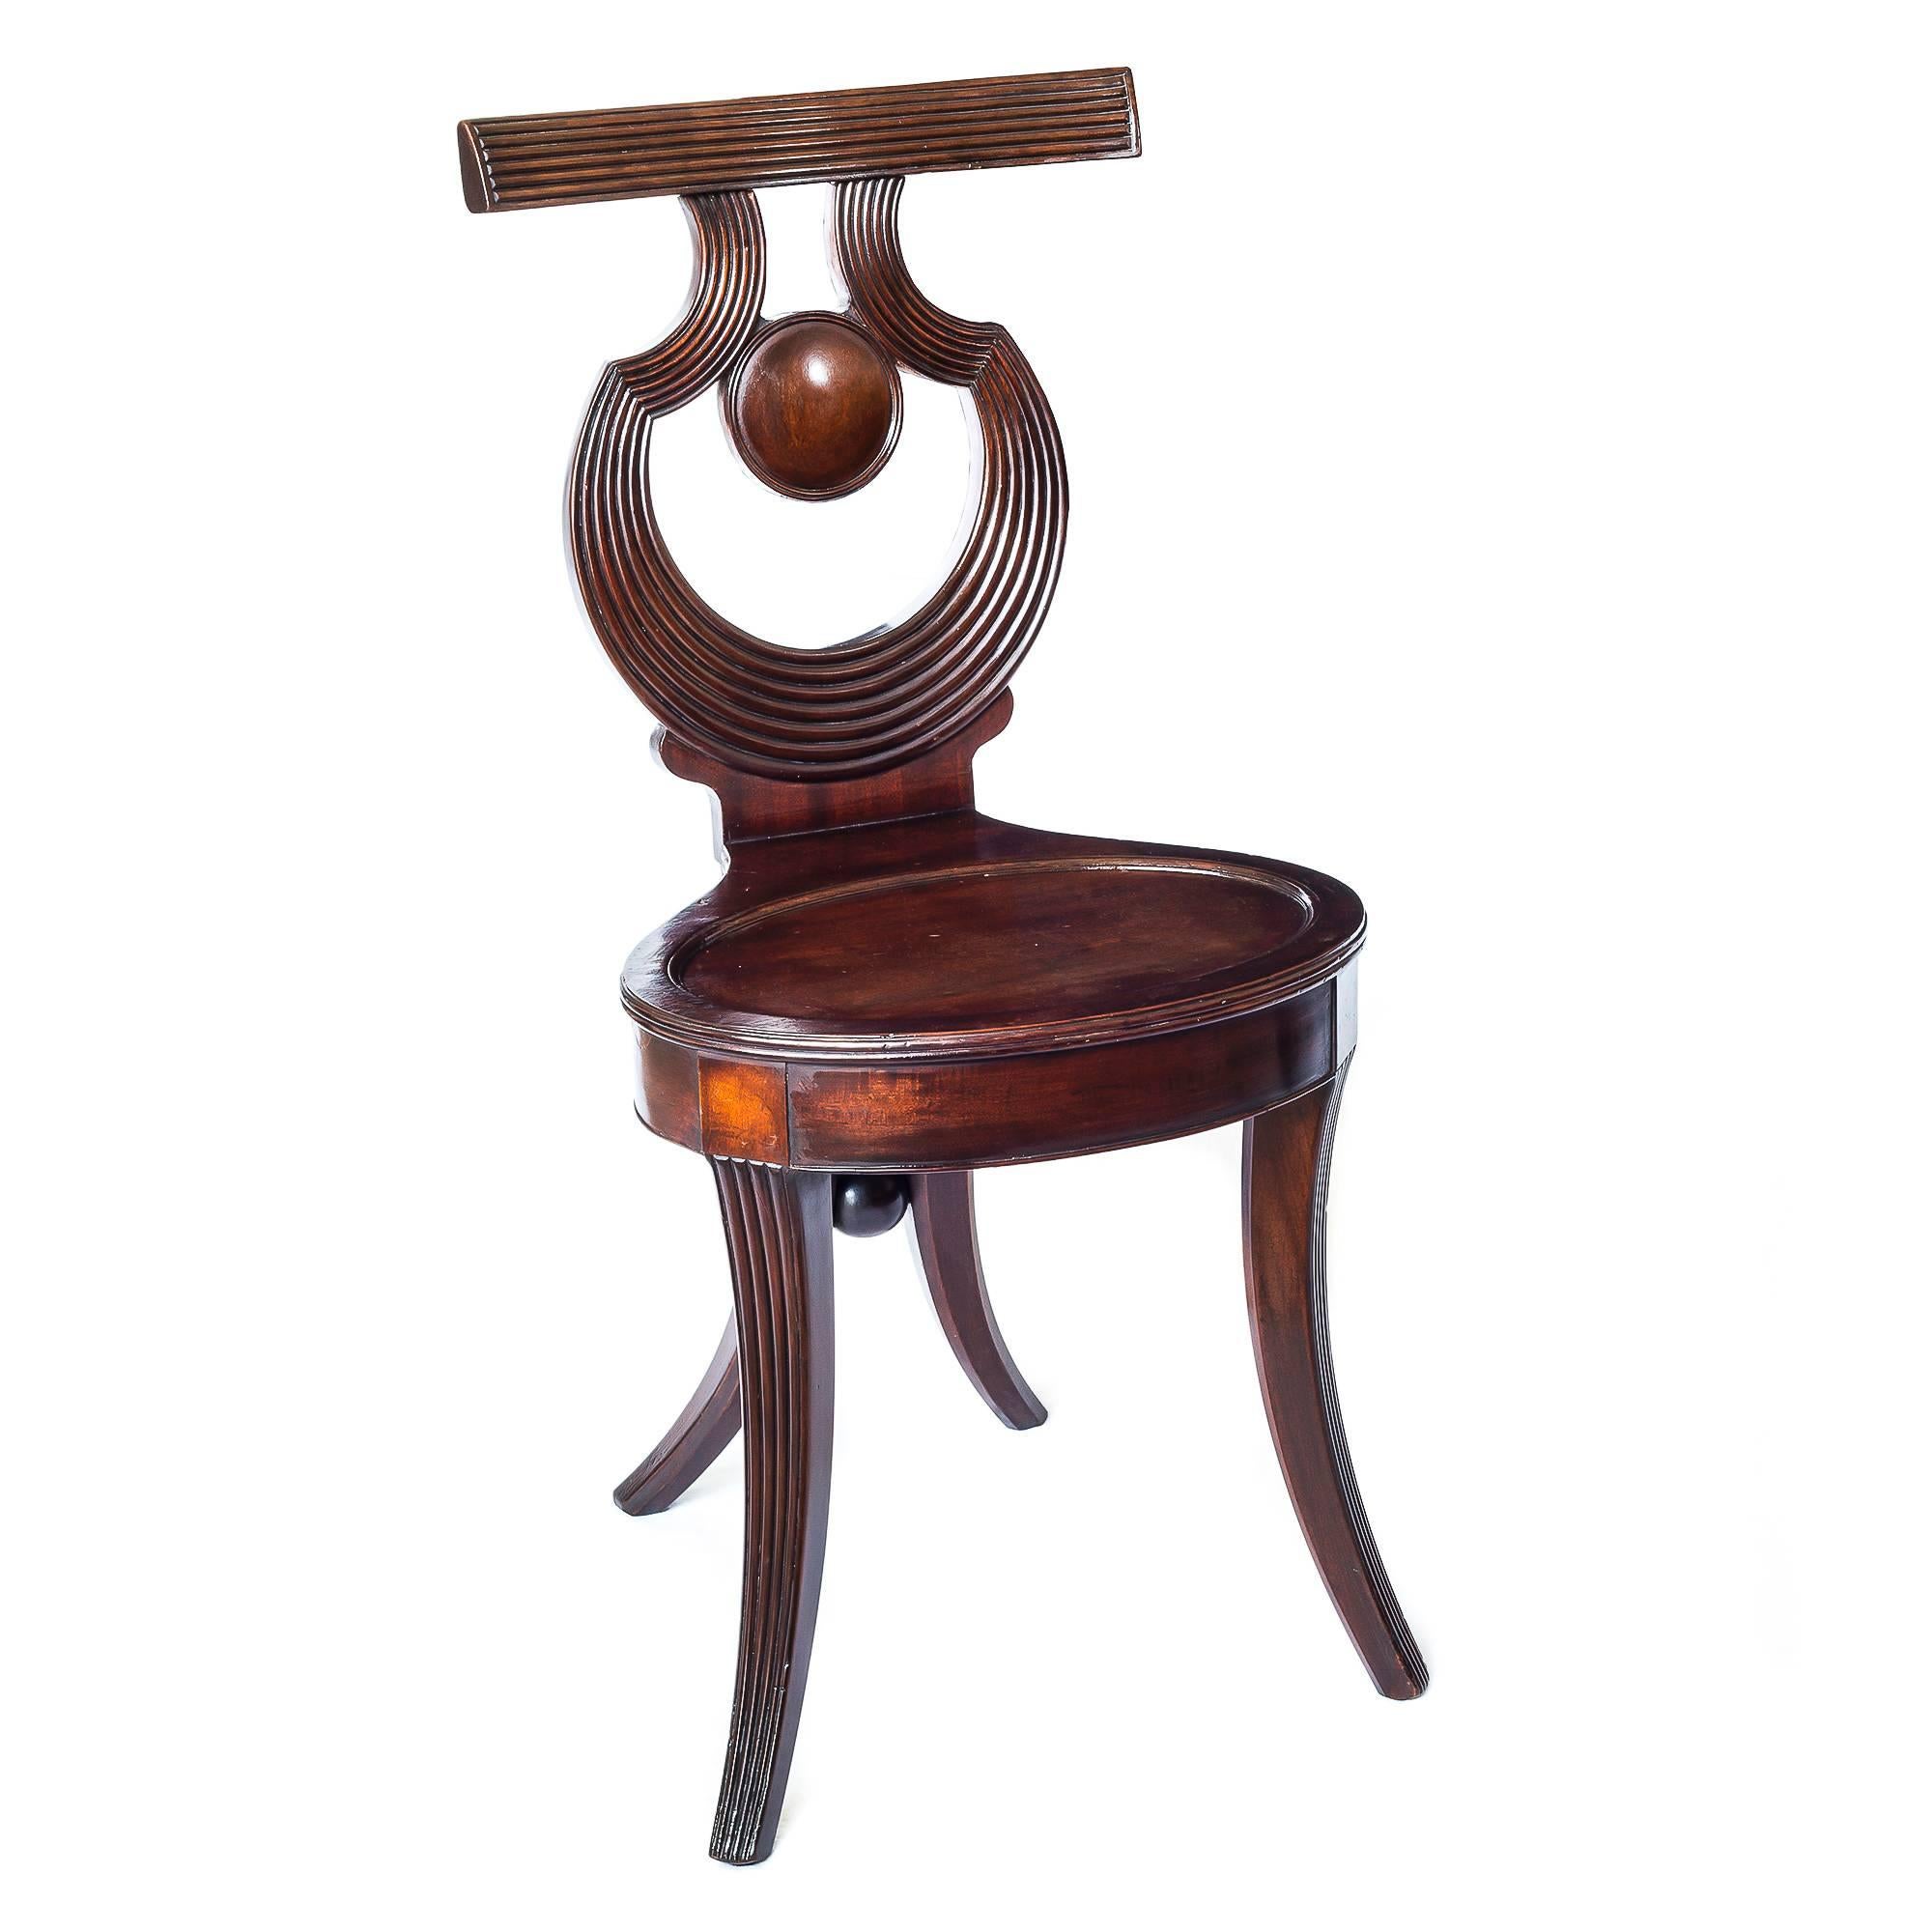 Carved Fine Rare English Regency Period Mahogany Hall Chairs